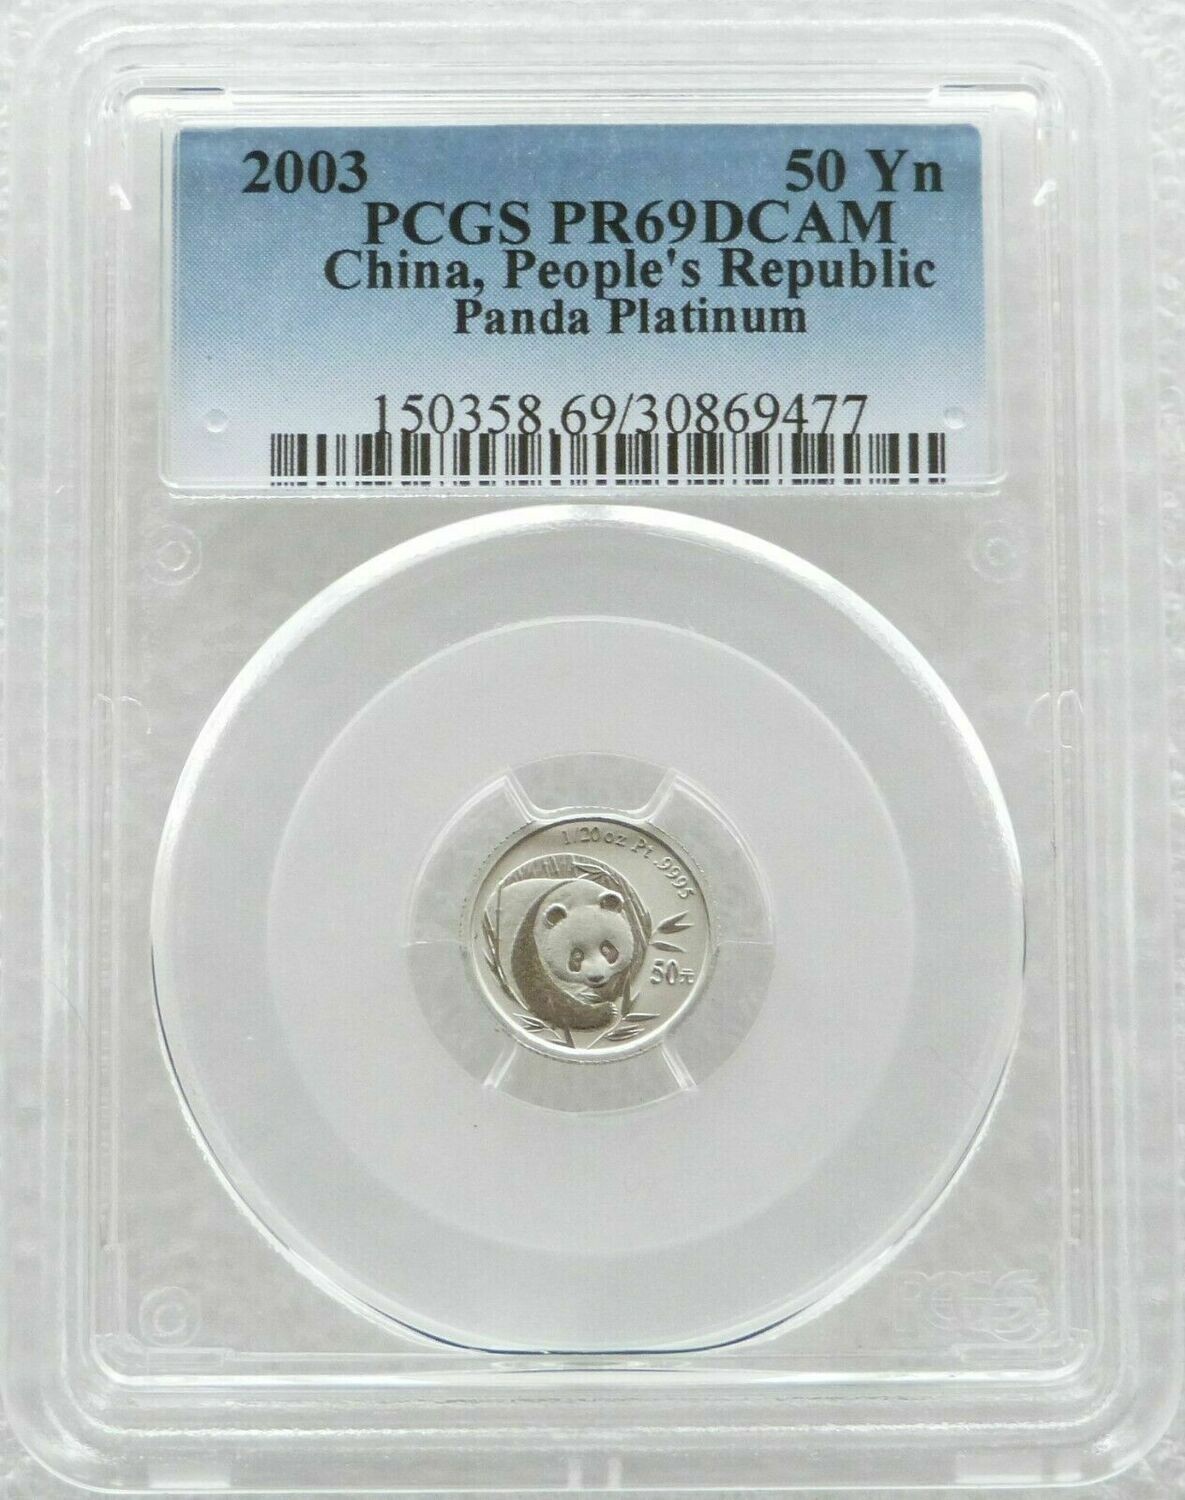 2003 China Panda 50 Yuan Platinum Proof 1/20oz Coin PCGS PR69 DCAM